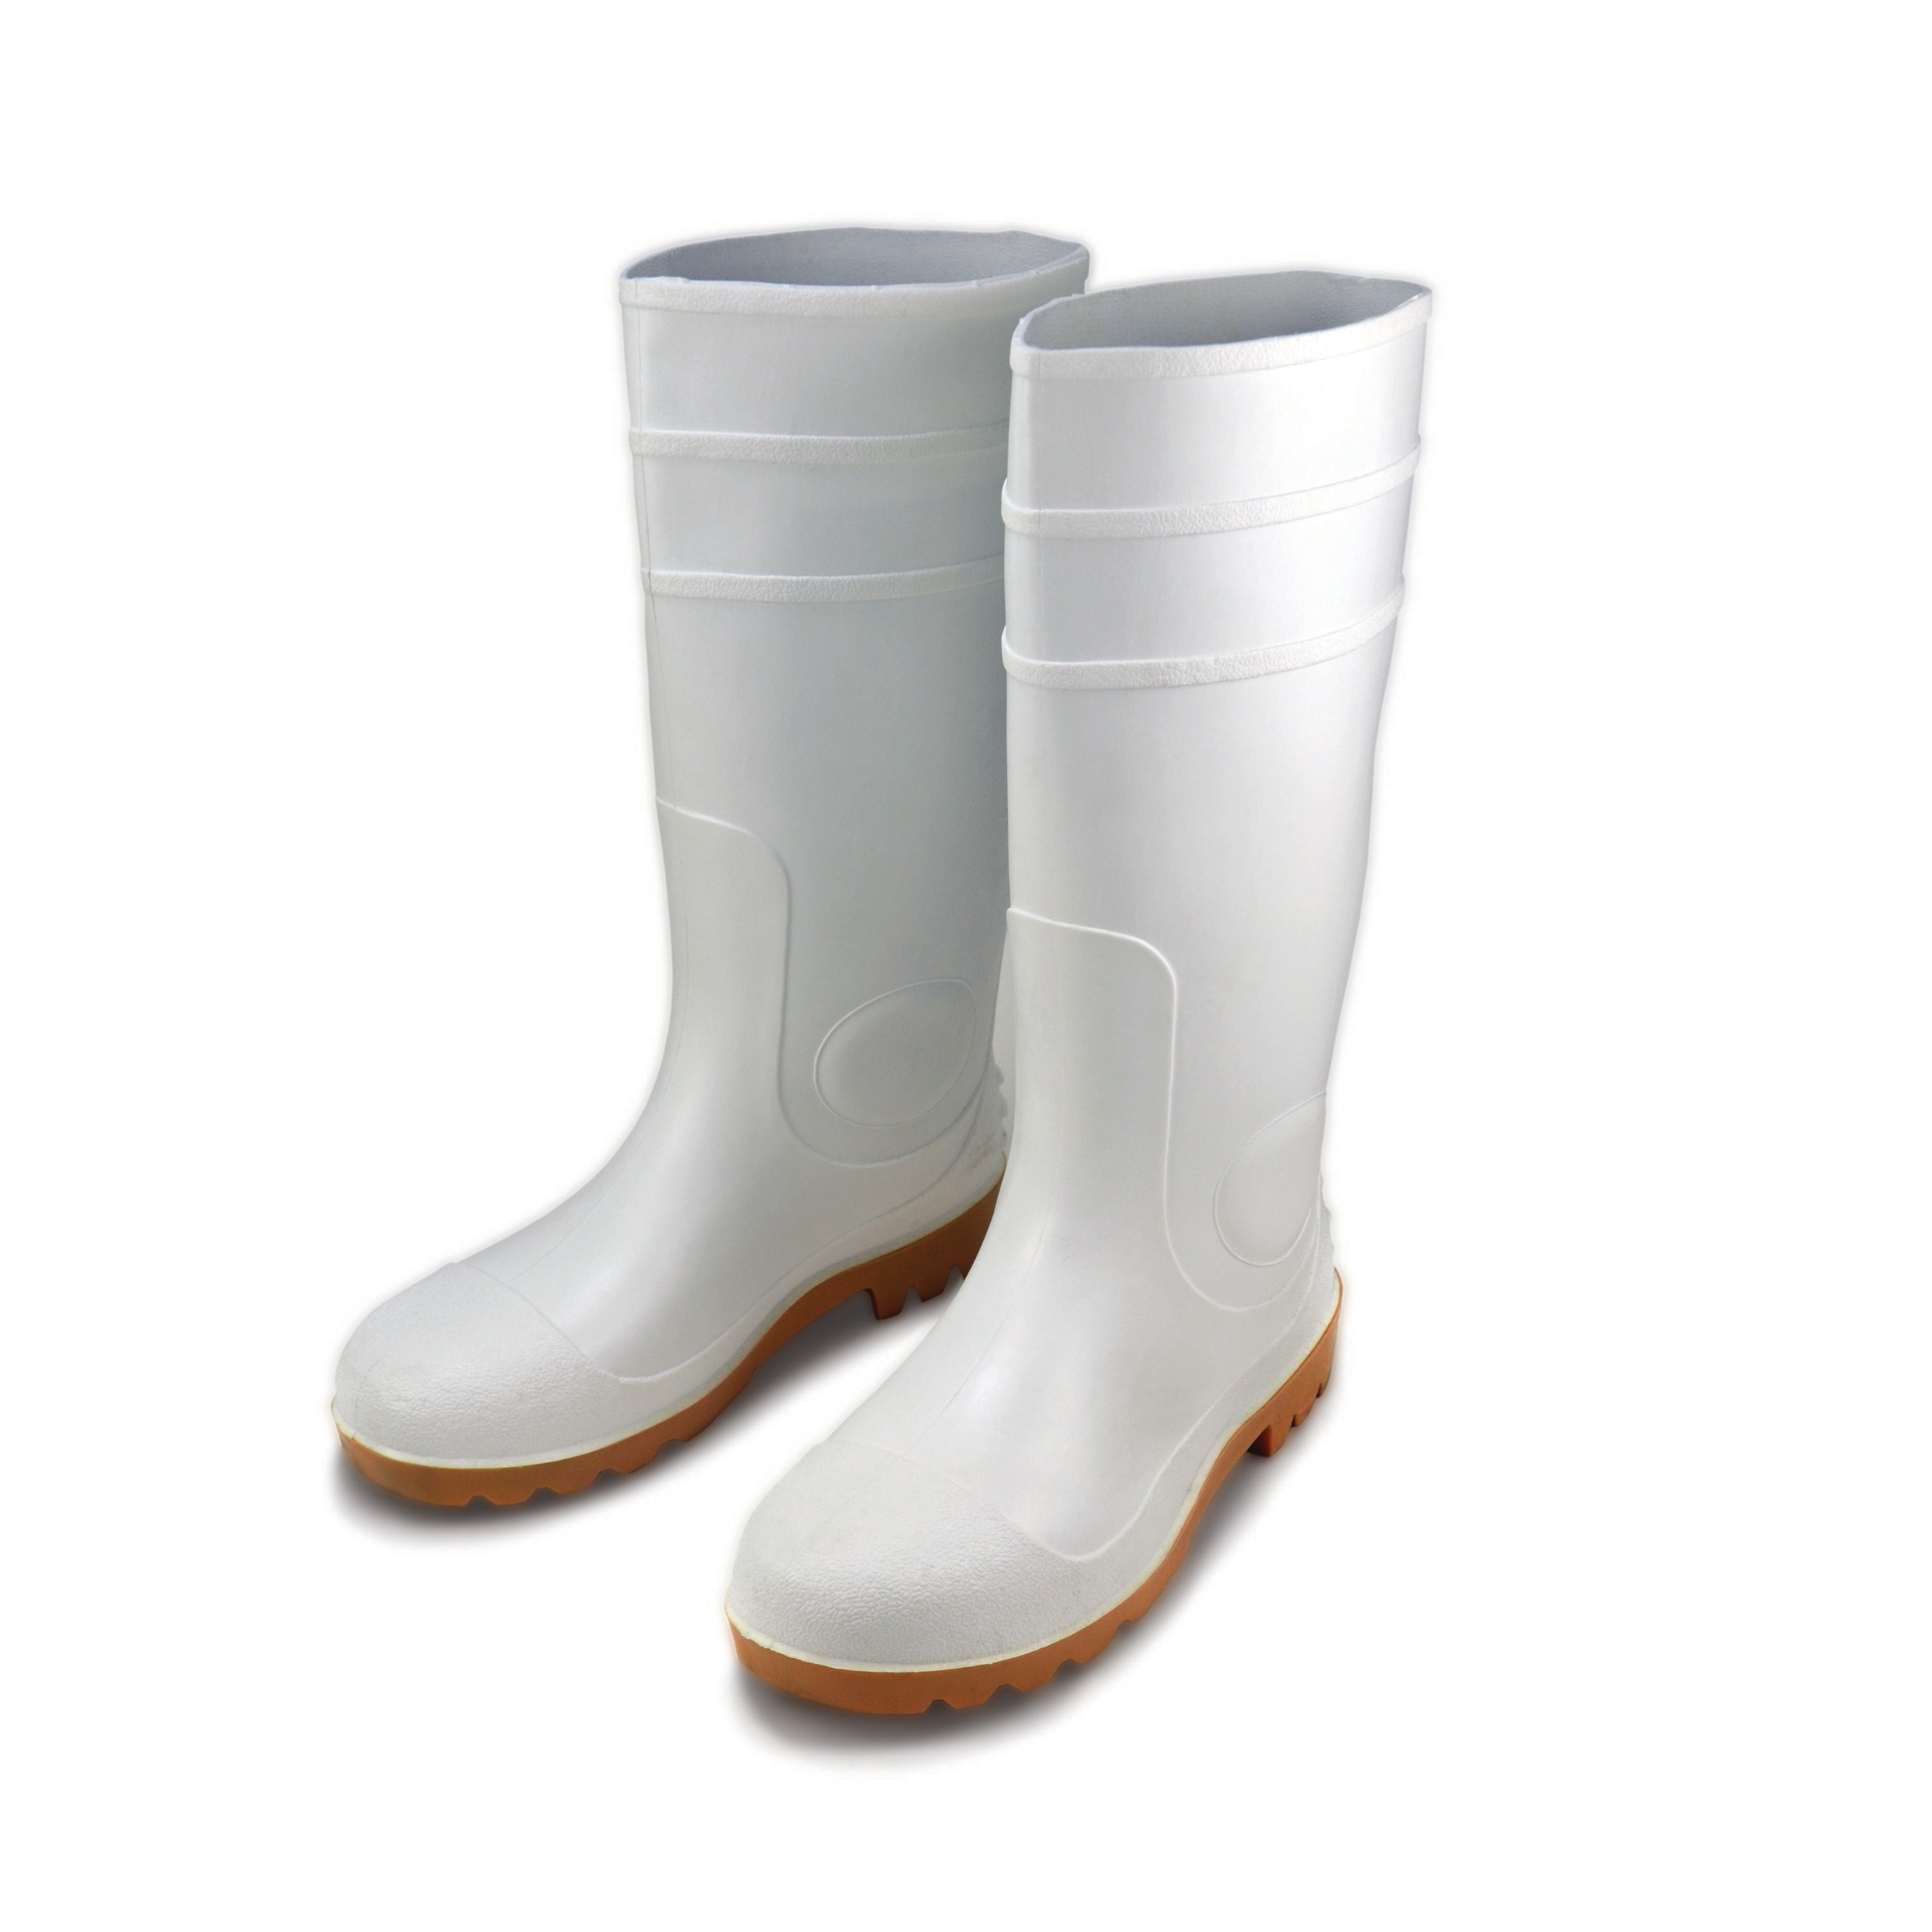 Orthofeet 885 Chukka Boots Women's 11A Narrow Black Leather Comfort Diabetic  | eBay